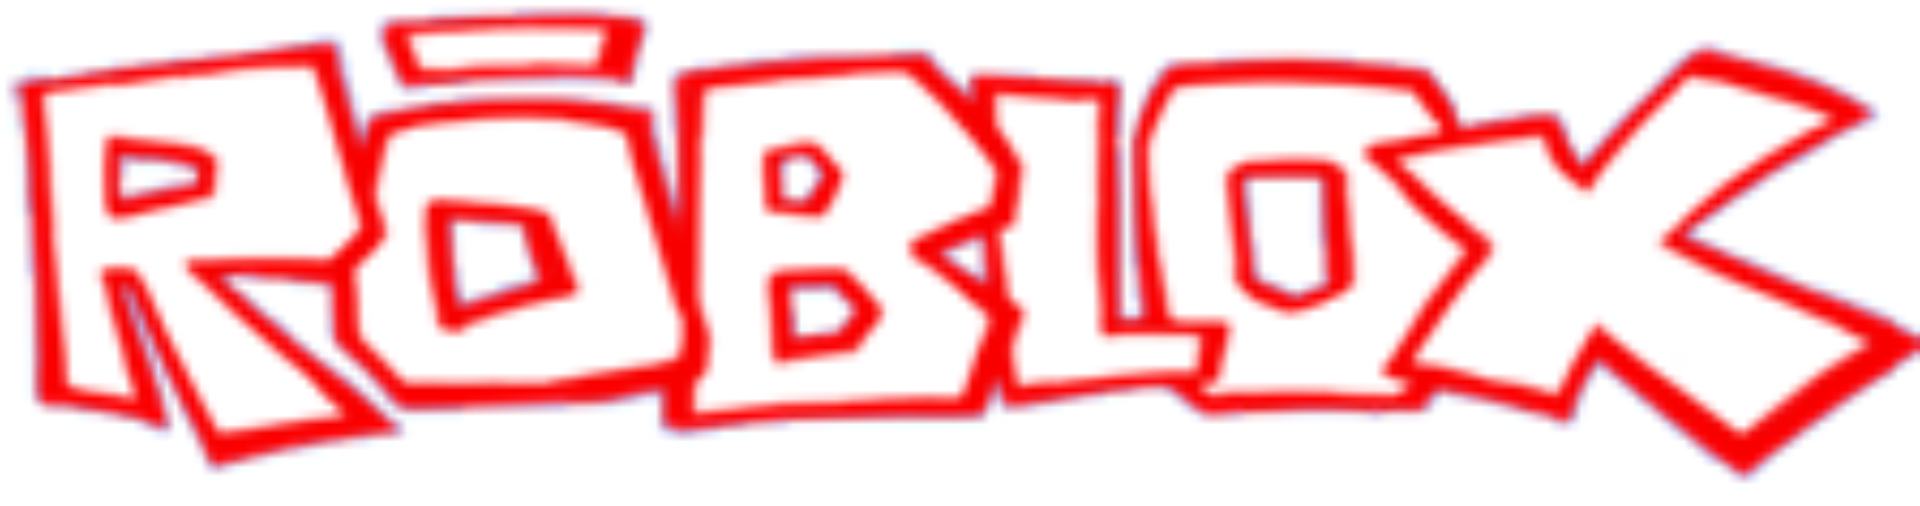 Roblox Logo Evolution 2023